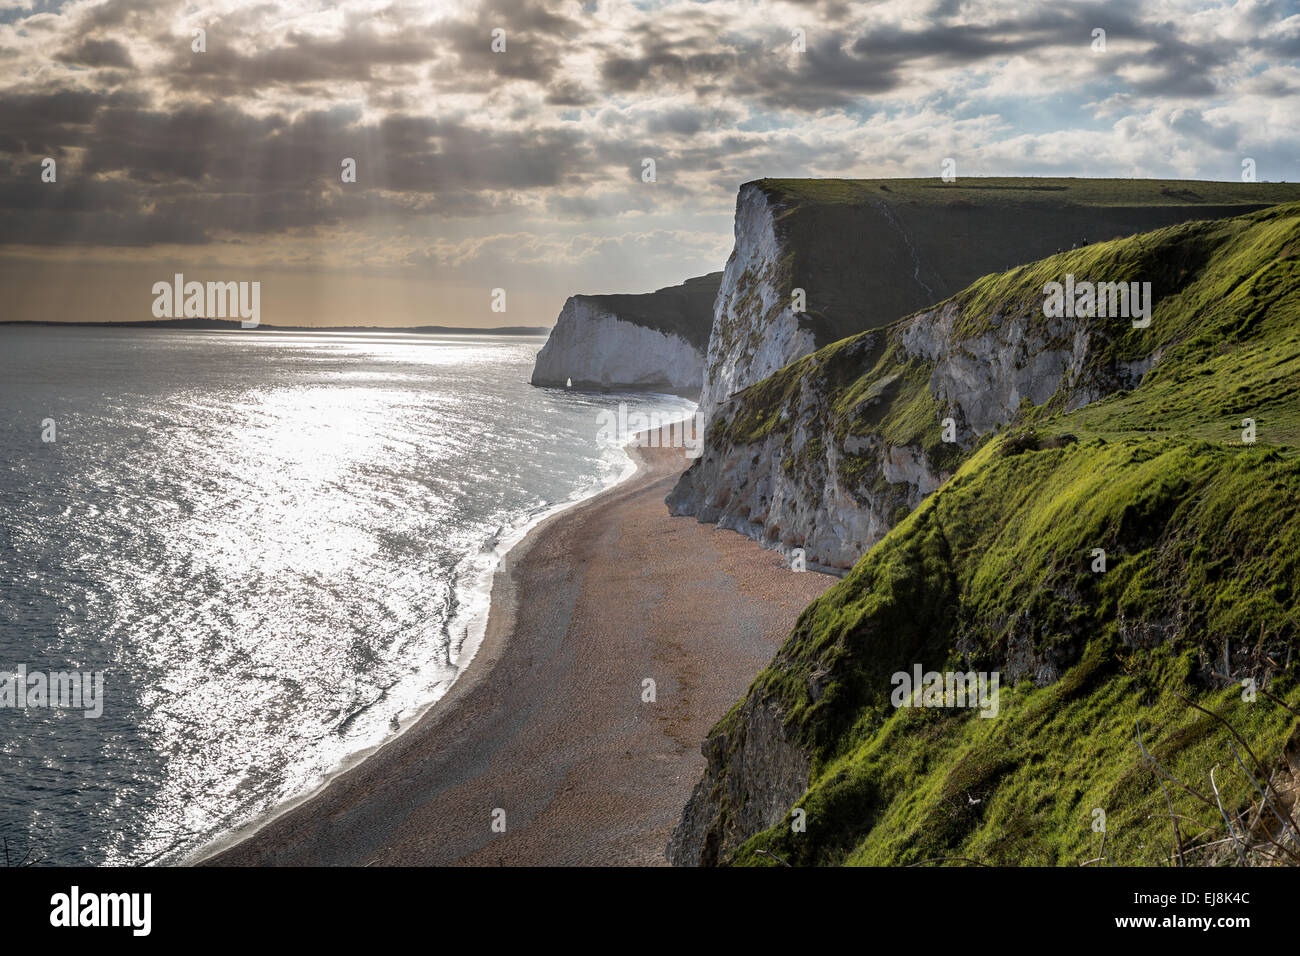 Coastal scene with beach, cliffs and the sea Stock Photo